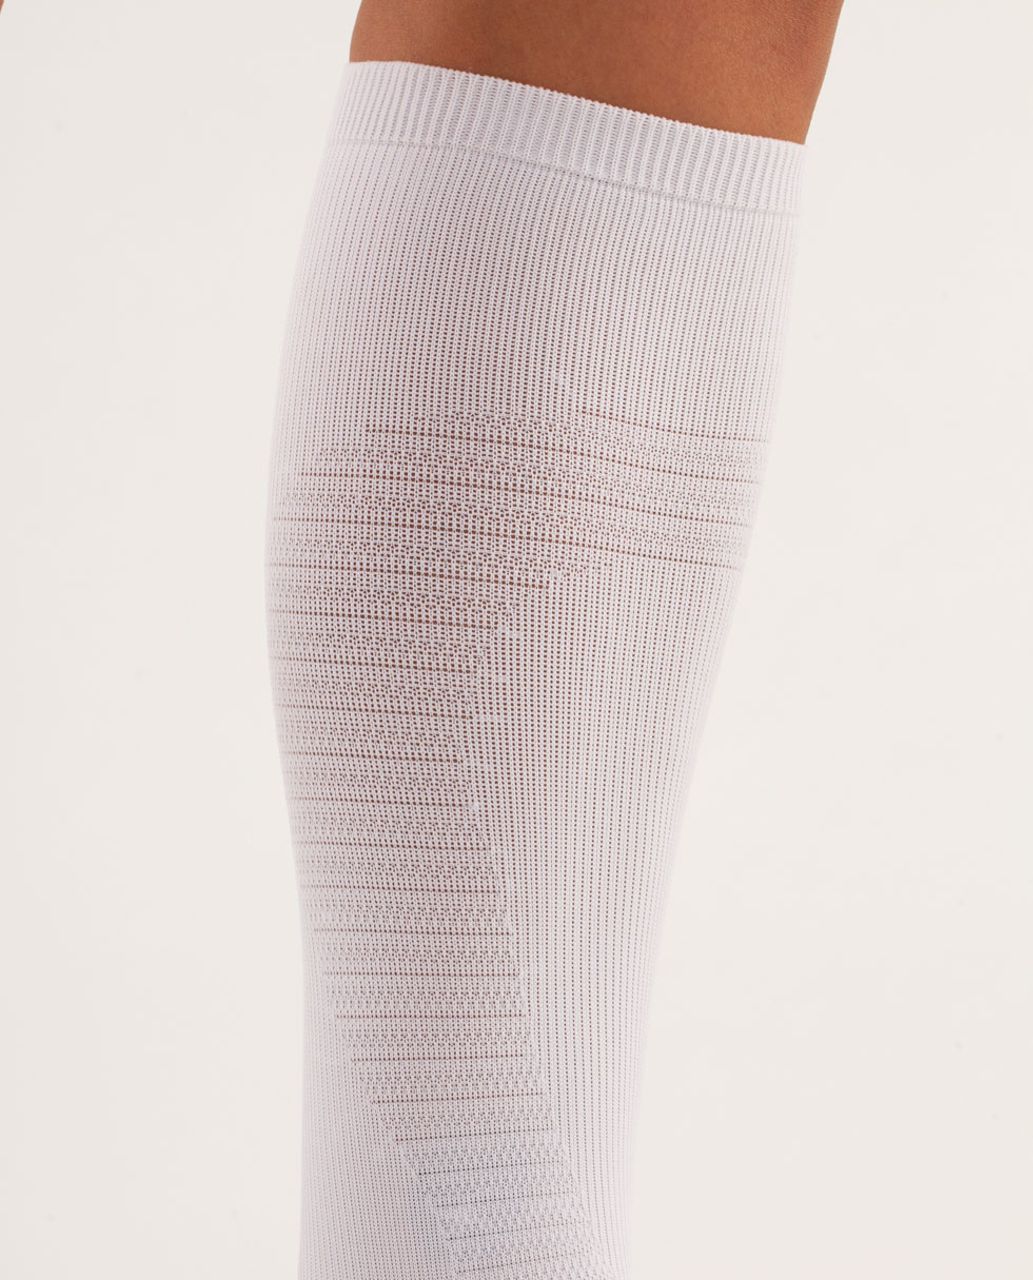 Lululemon Women's Compression Sock - White